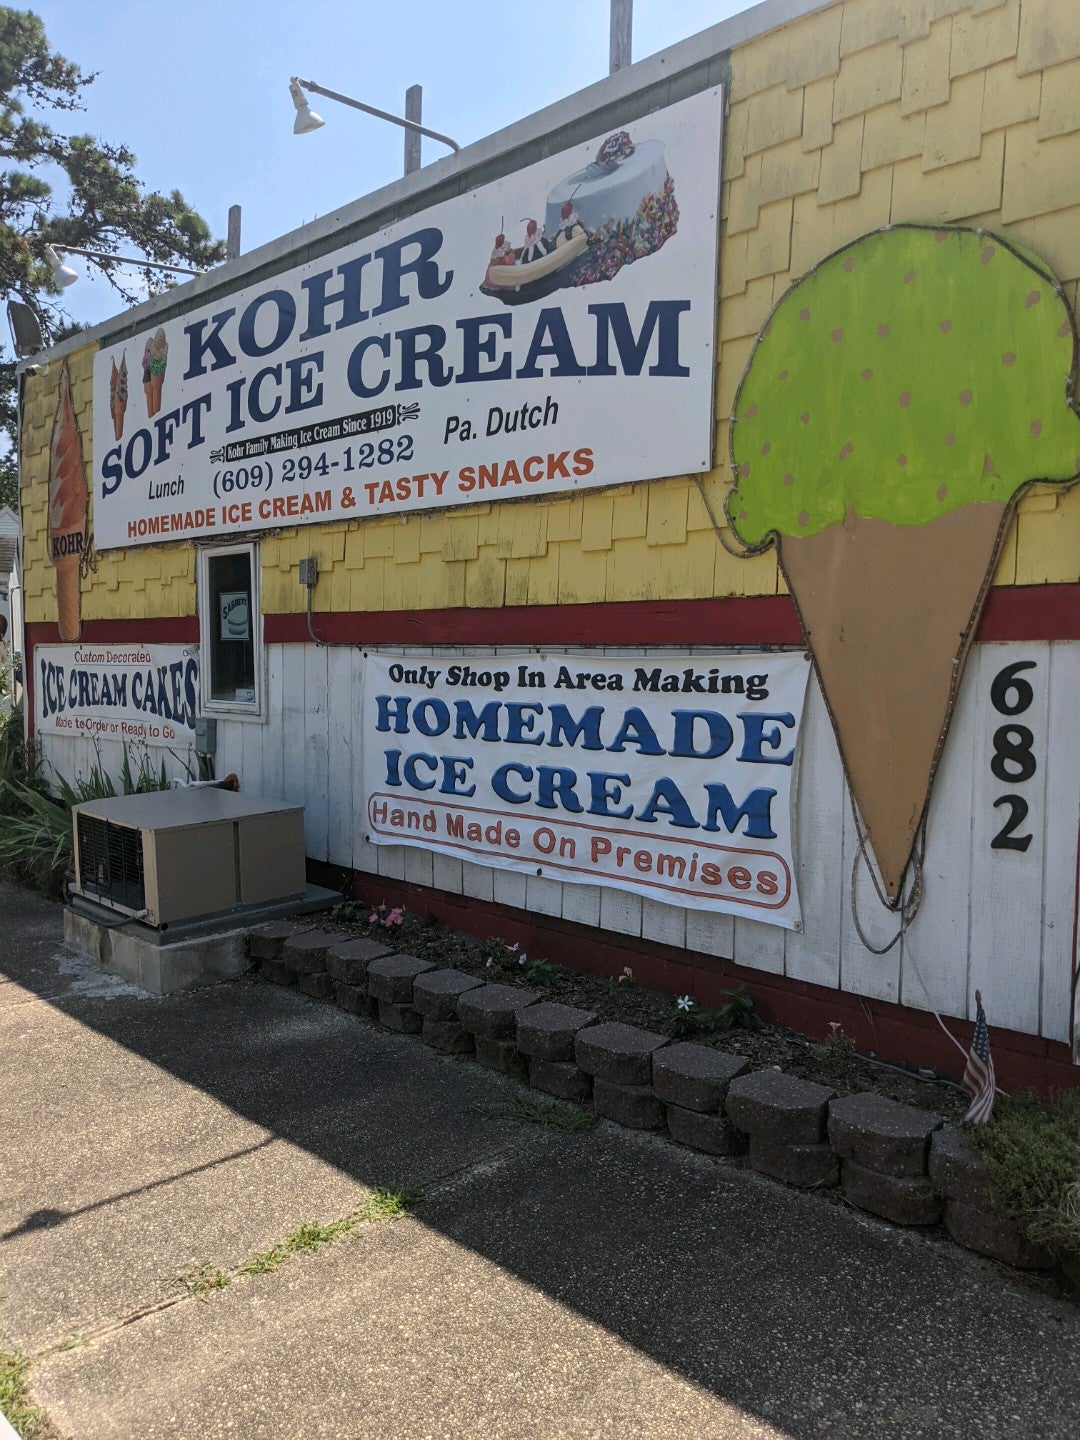 The Ice Cream Shop of Manahawkin